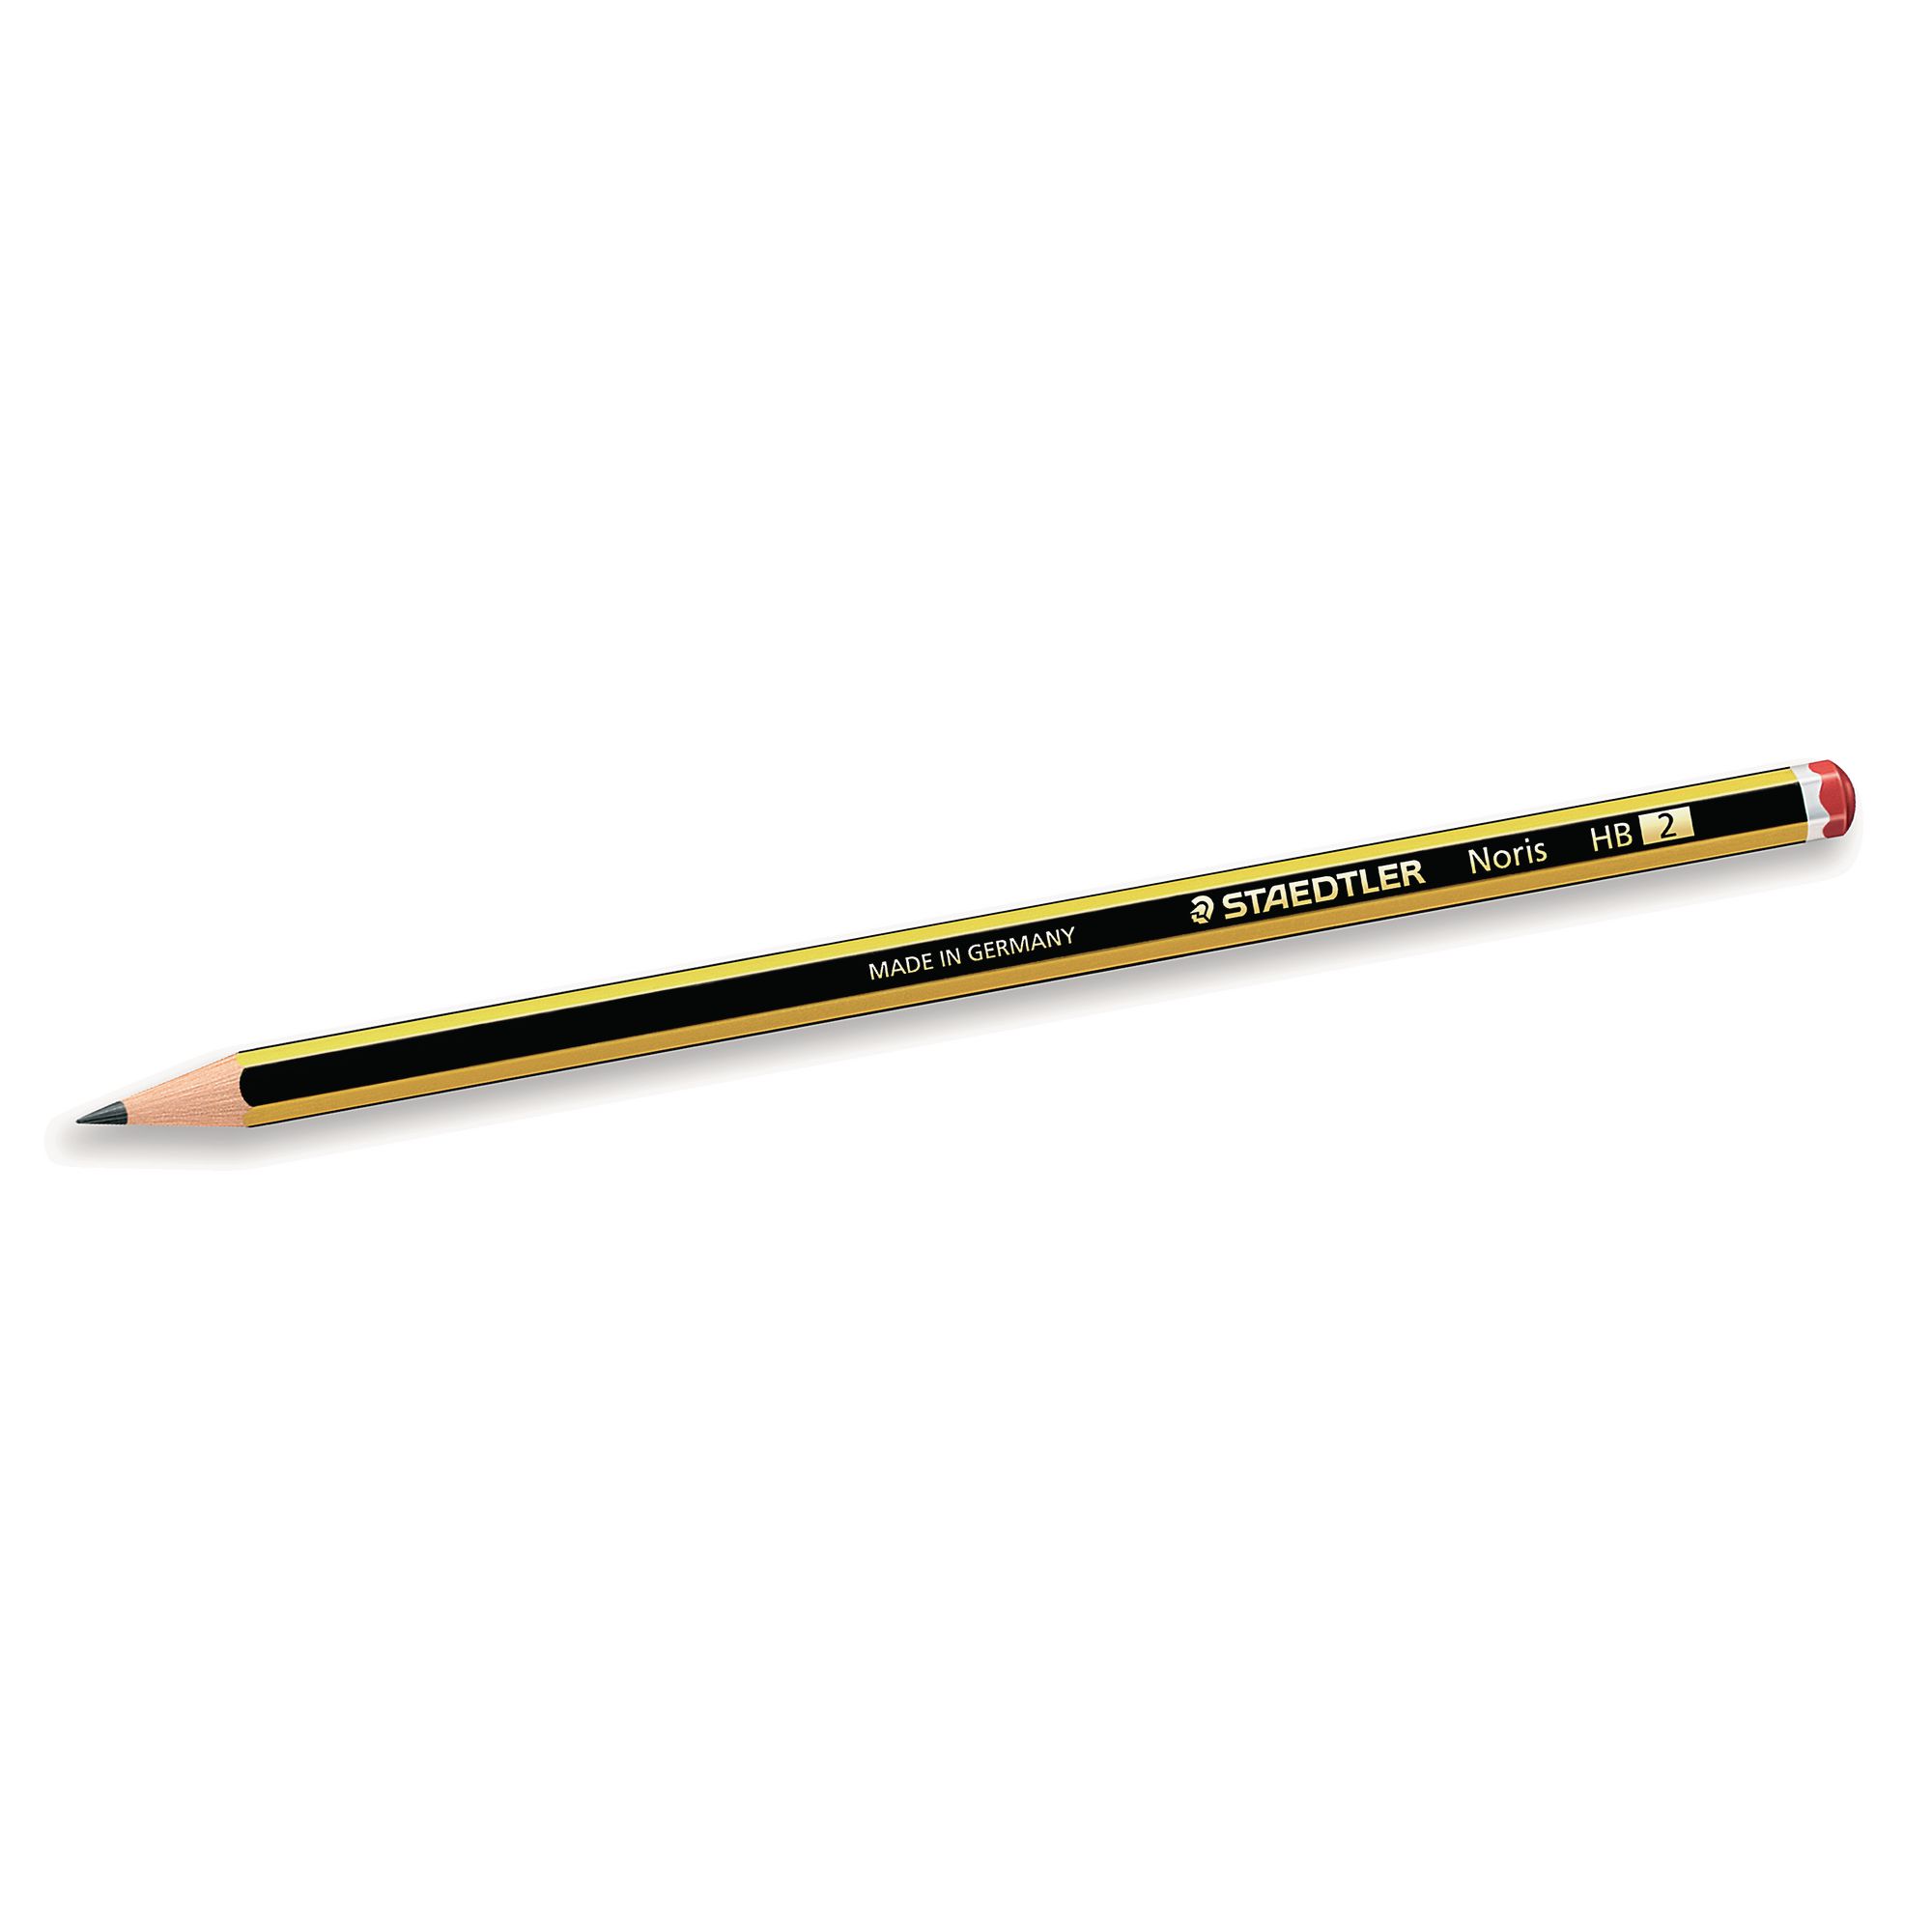 pencil description